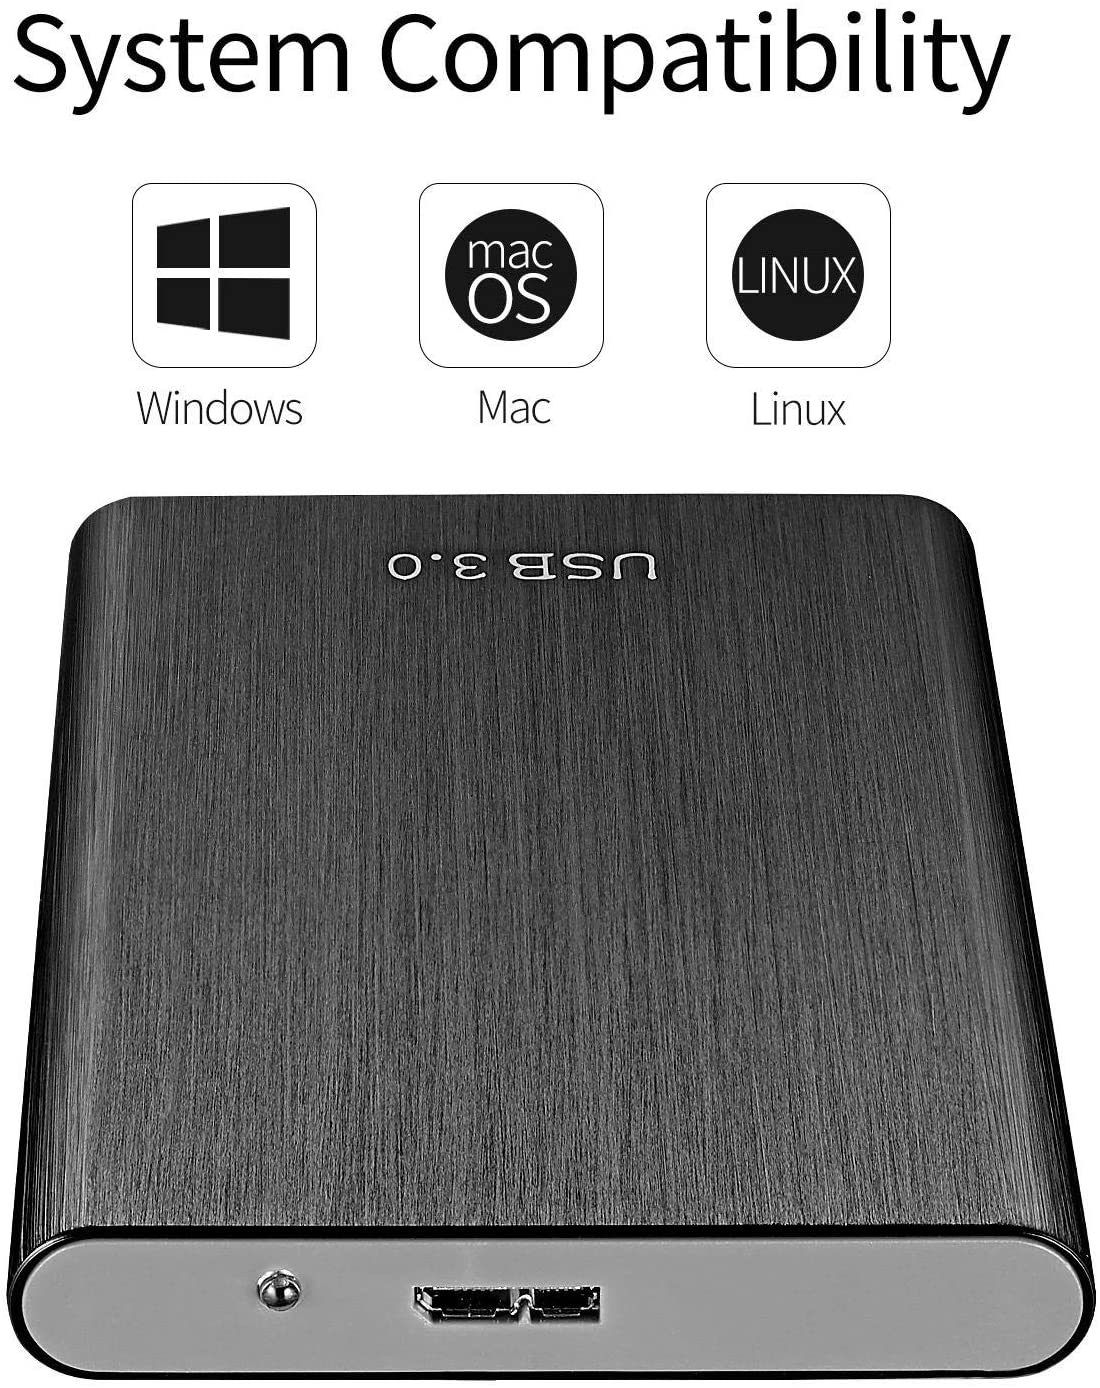 External Portable Hard Drive External HDD 1TB or 2TB High Speed USB 3.1 for Mac, PC, Laptop